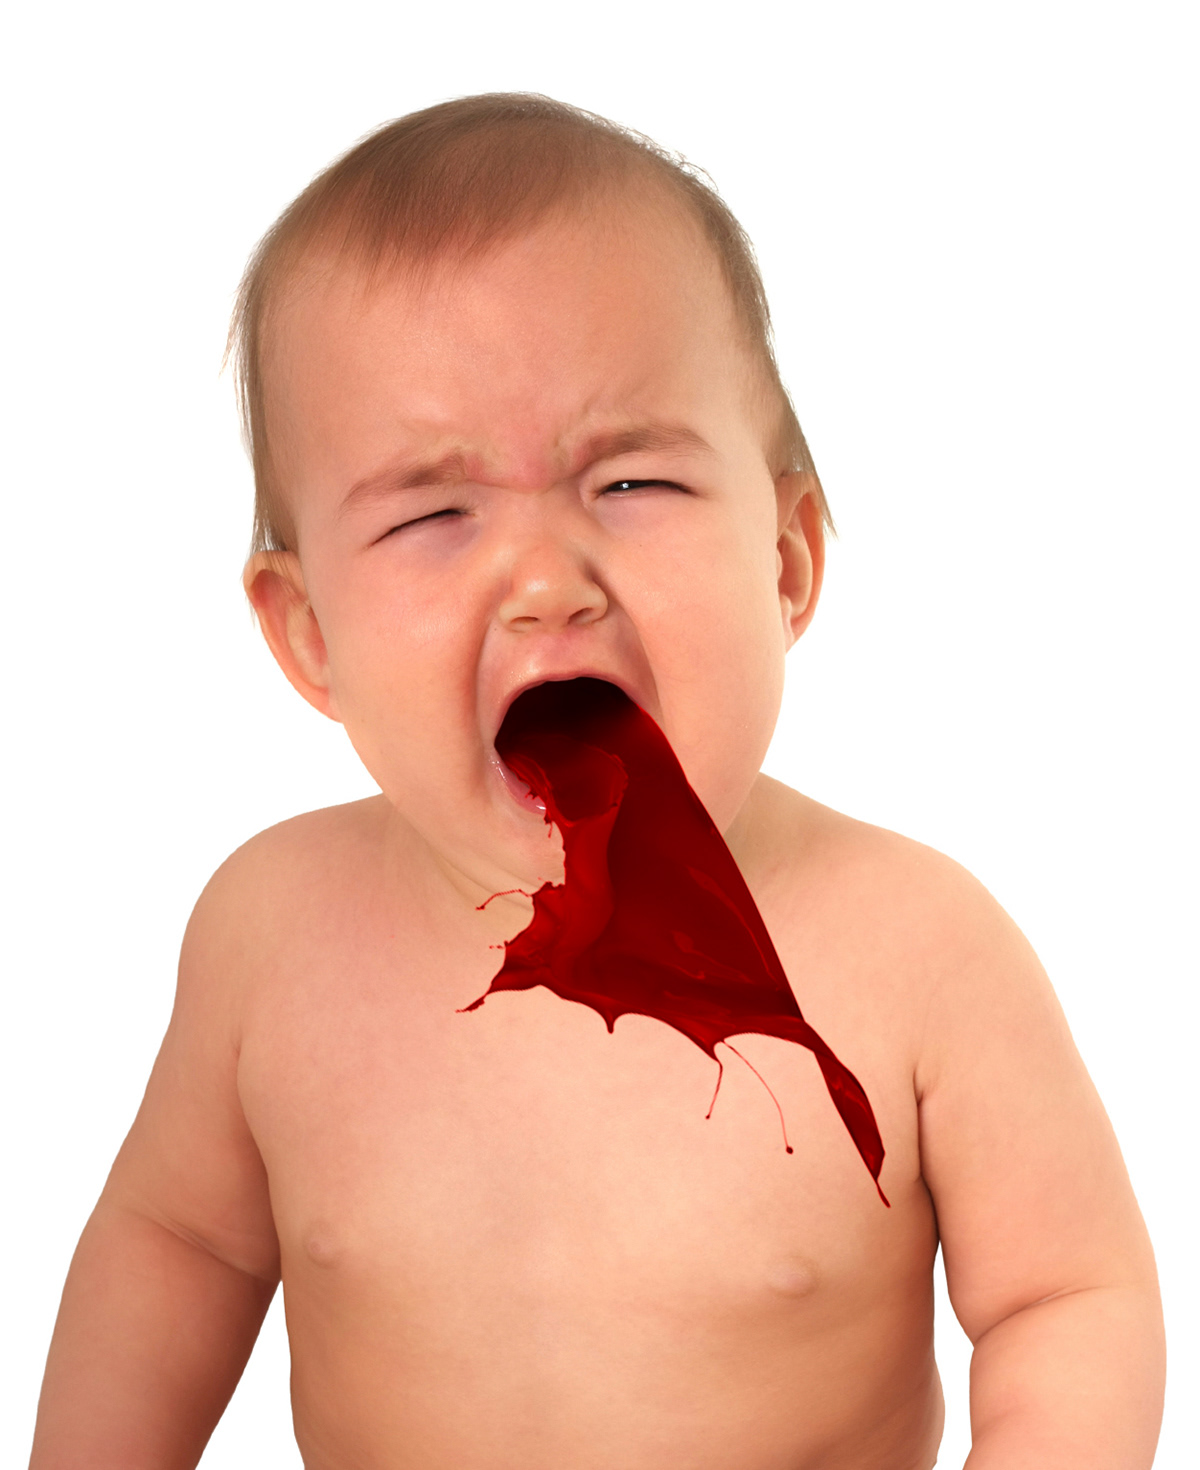 baby Cry baby cry kid scream blood tears Baby Scream